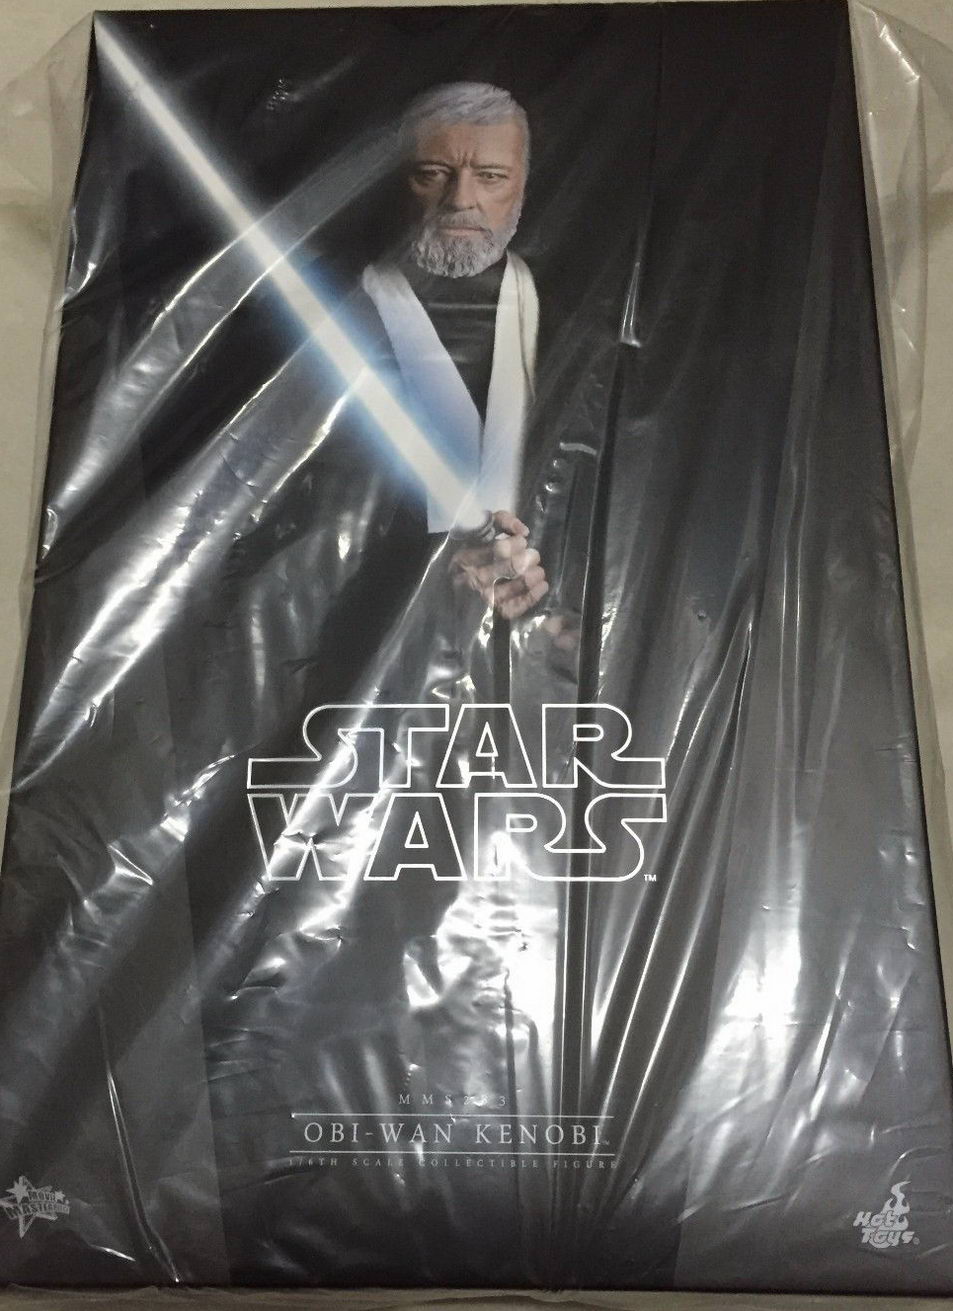 JualHotToys.com Toko HOT TOYS Star Wars Obi Wan Kenobi MMS283 1/6 Movie Action Figure Harga Murah - MISB Produk Distributor Resmi Jakarta Indonesia